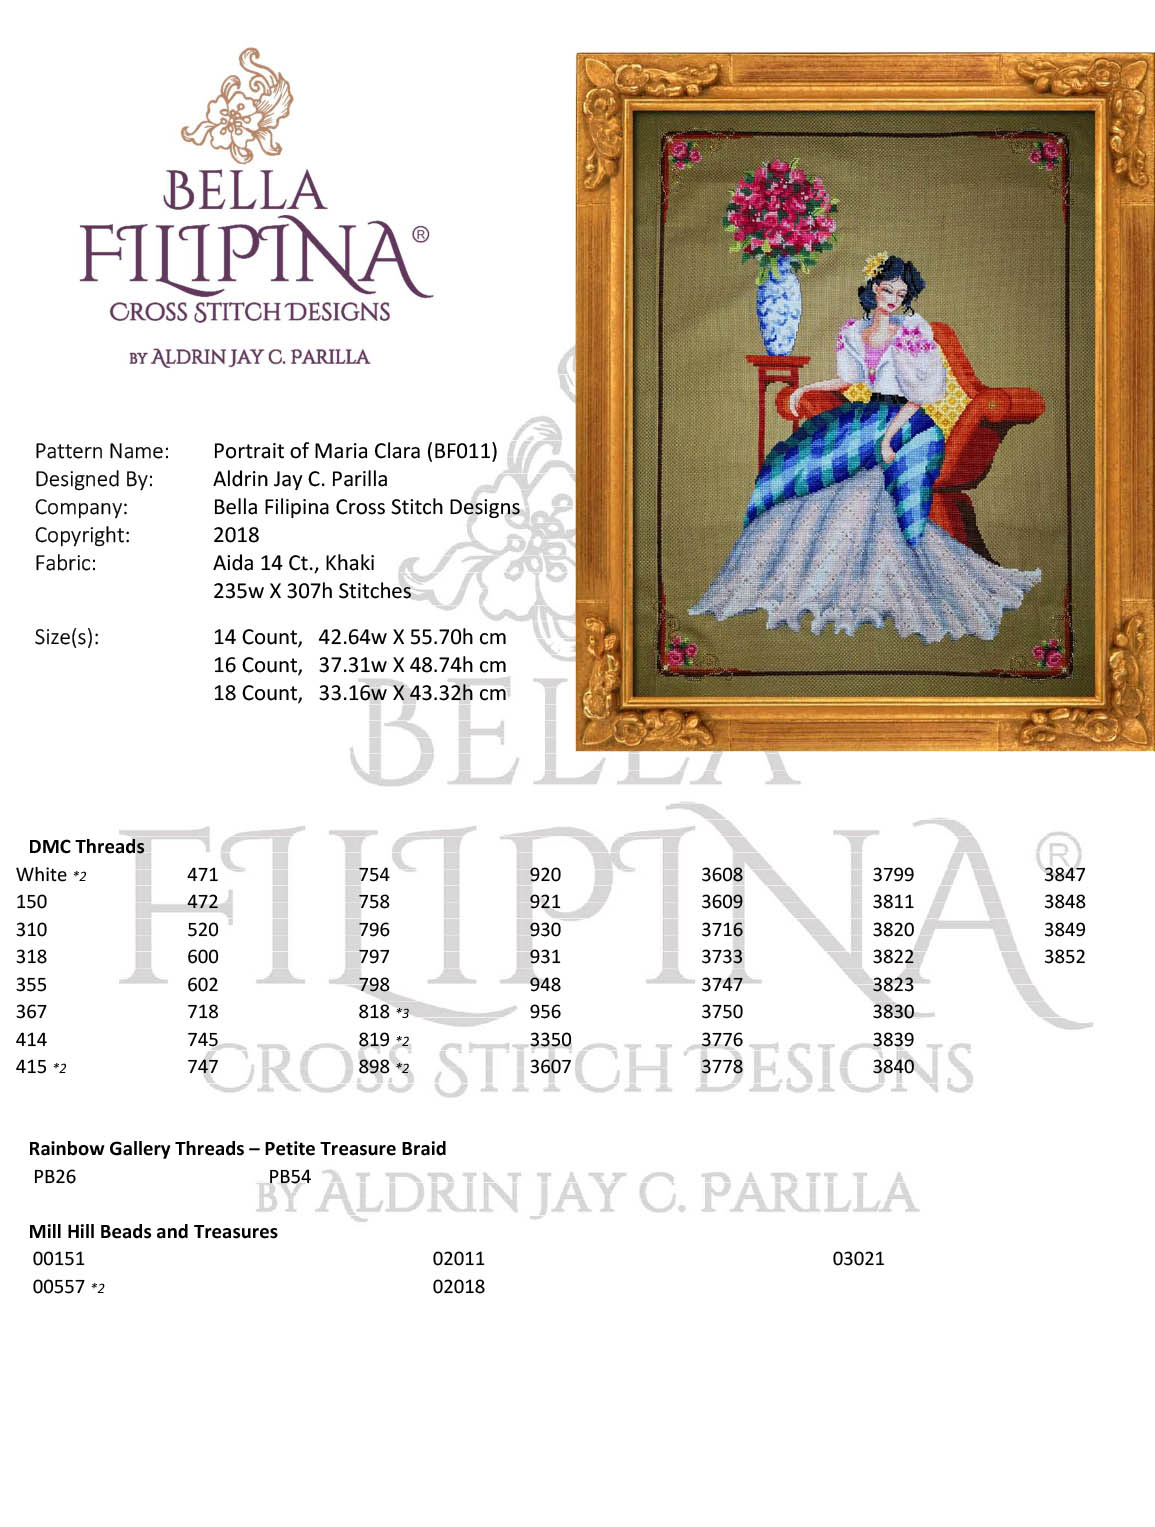 BF011 Bella Filipina-Portrait of Maria Clara